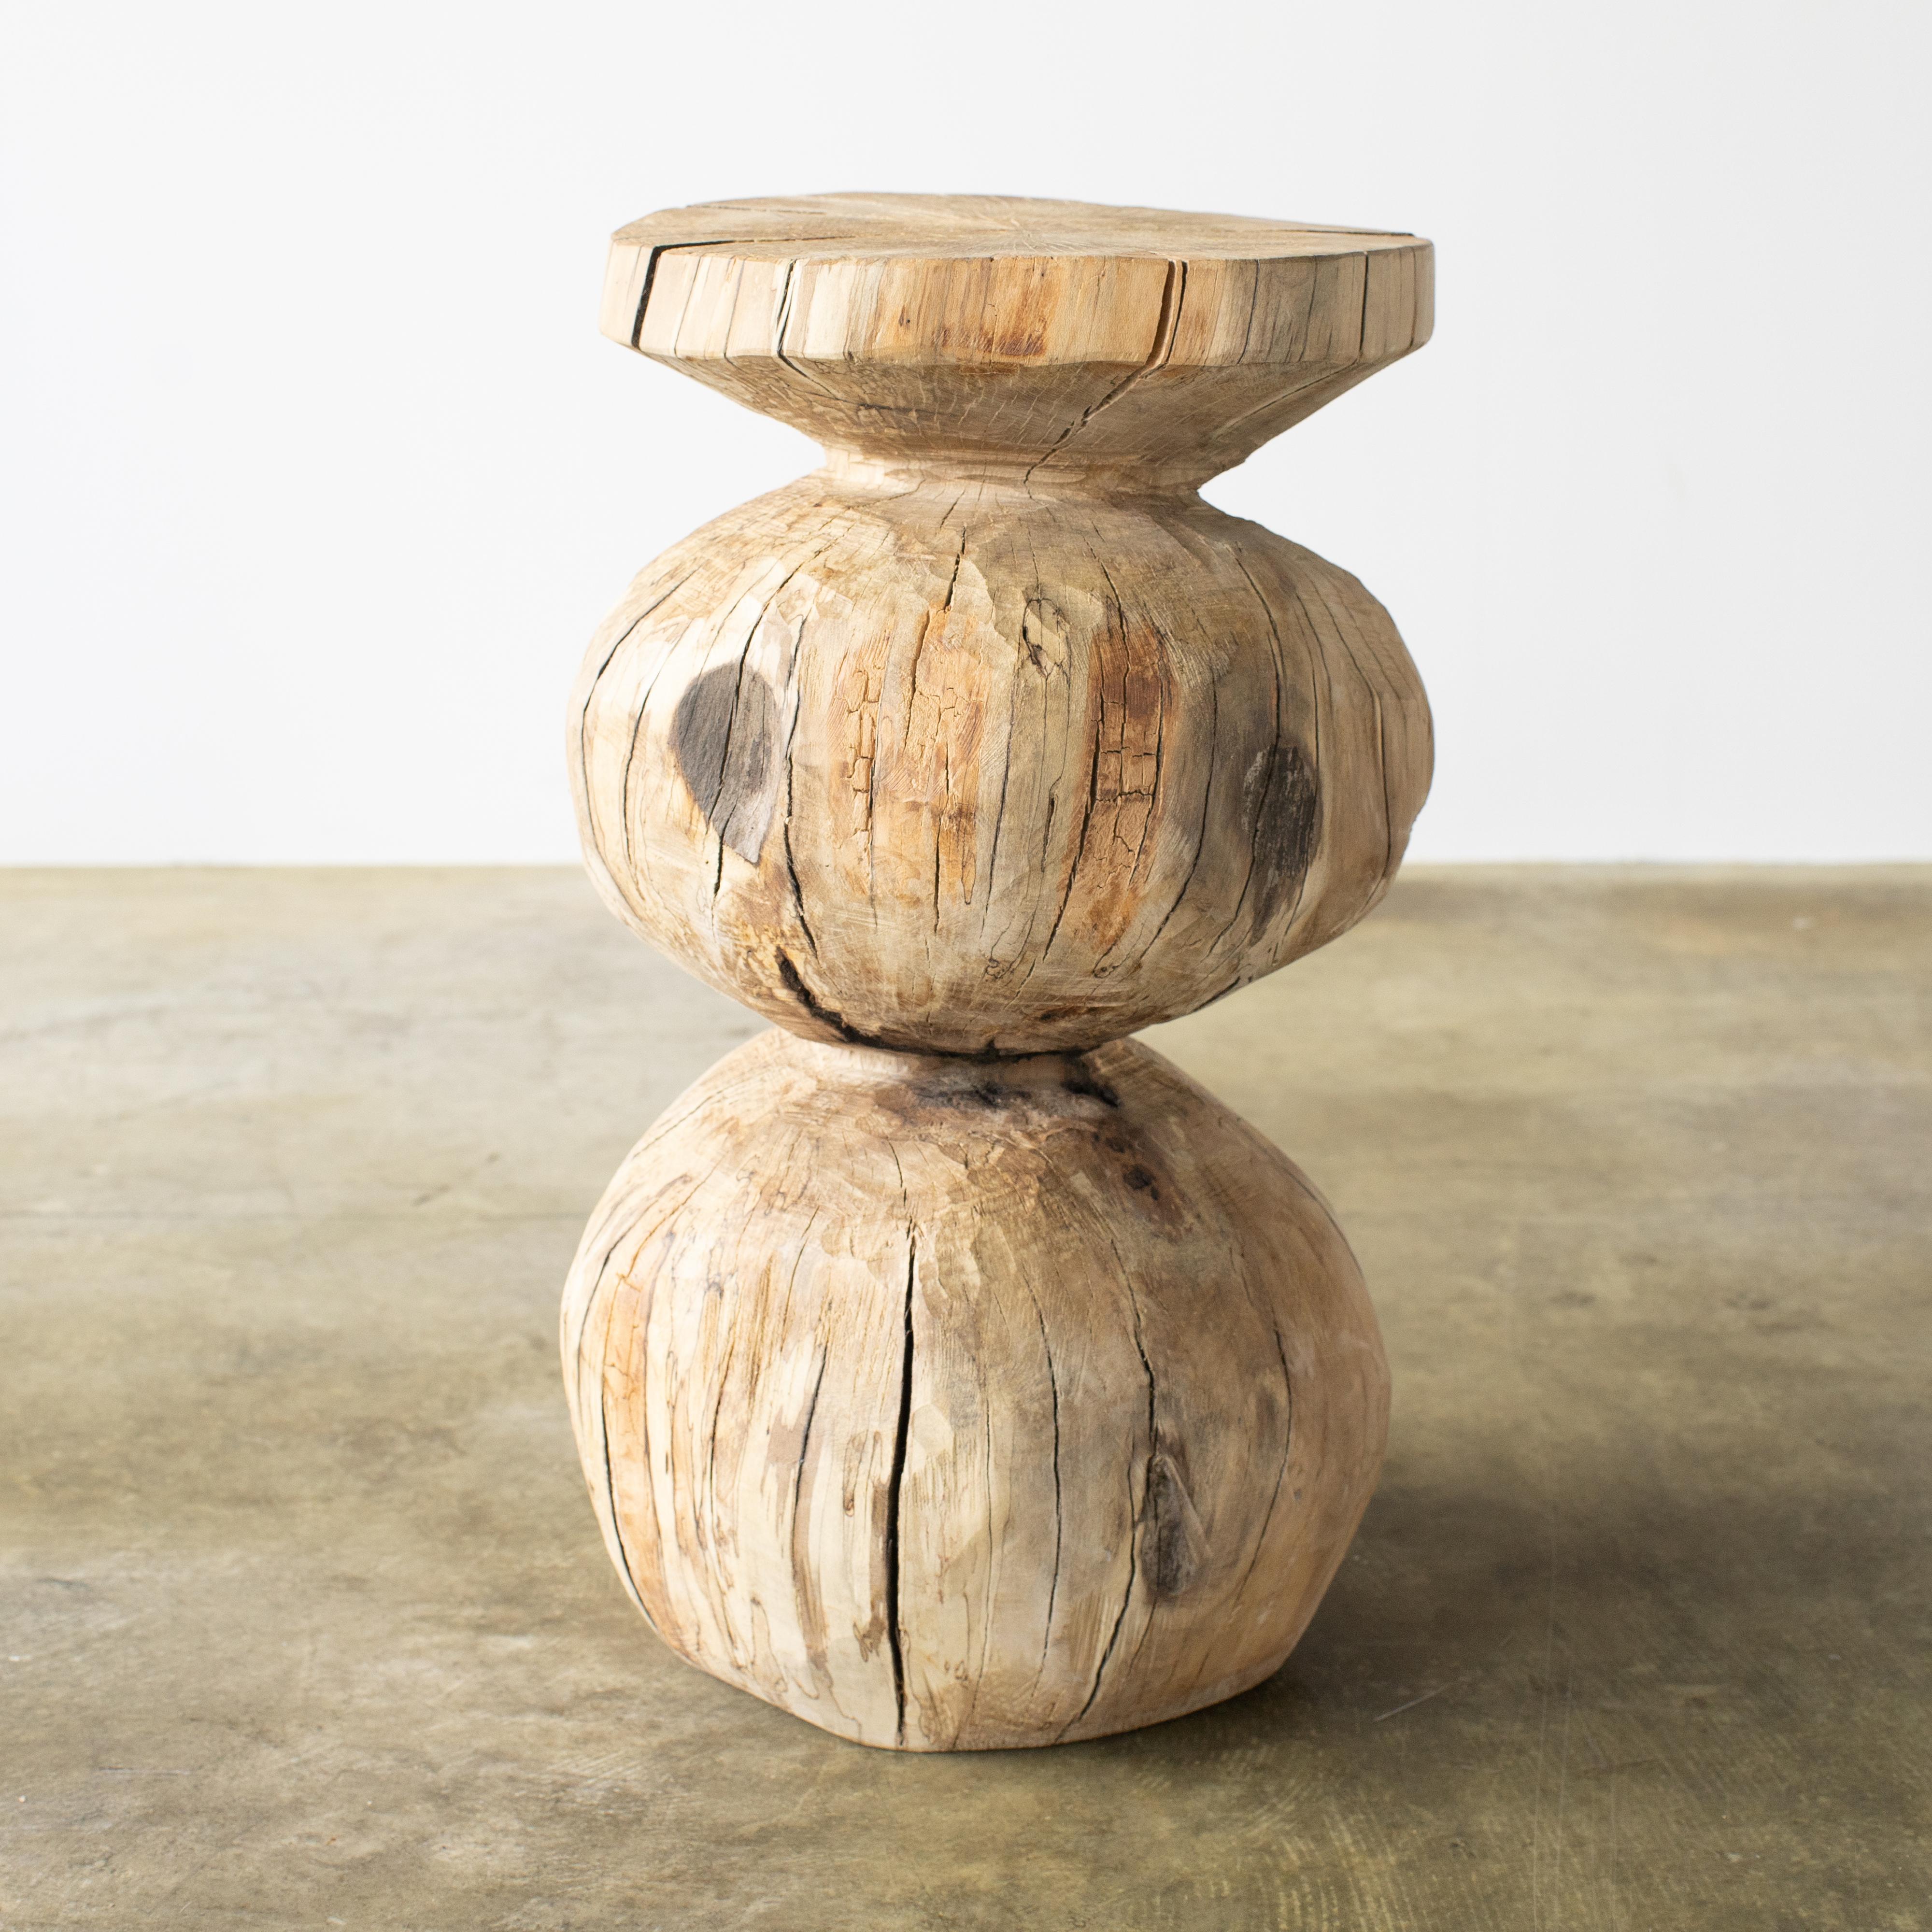 Japanese Hiroyuki Nishimura Furniture Sculptural Wood Stool 10-12 Tribal Glamping